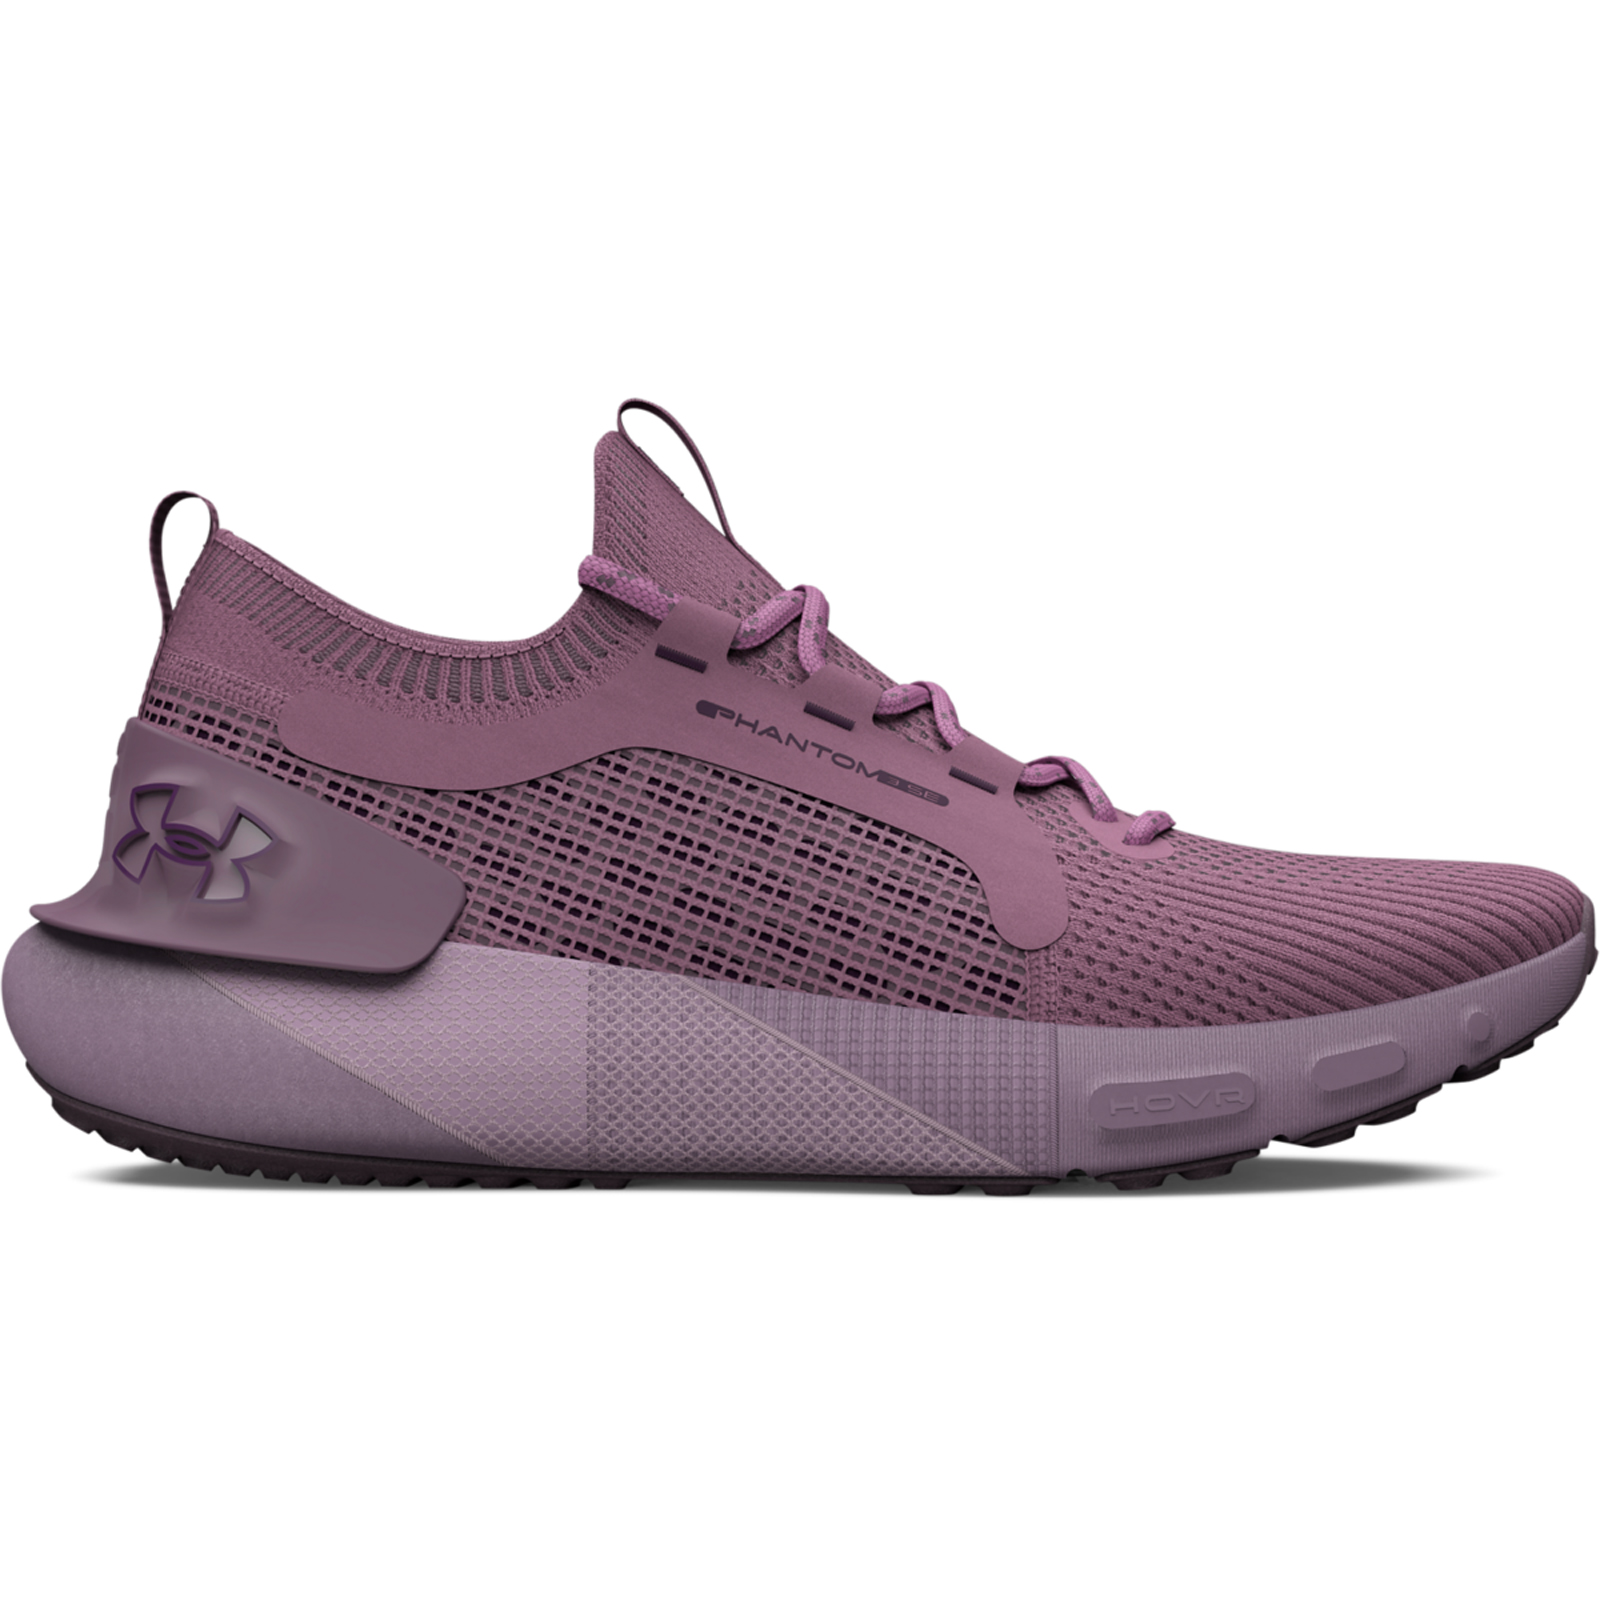 Under Armour - Women's UA HOVR™ Phantom 3 SE Running Shoes - Misty Purple/Parisian Purple/Eggplant Purple Γυναικεία > Παπούτσια > Αθλητικά > Παπούτσι Low Cut